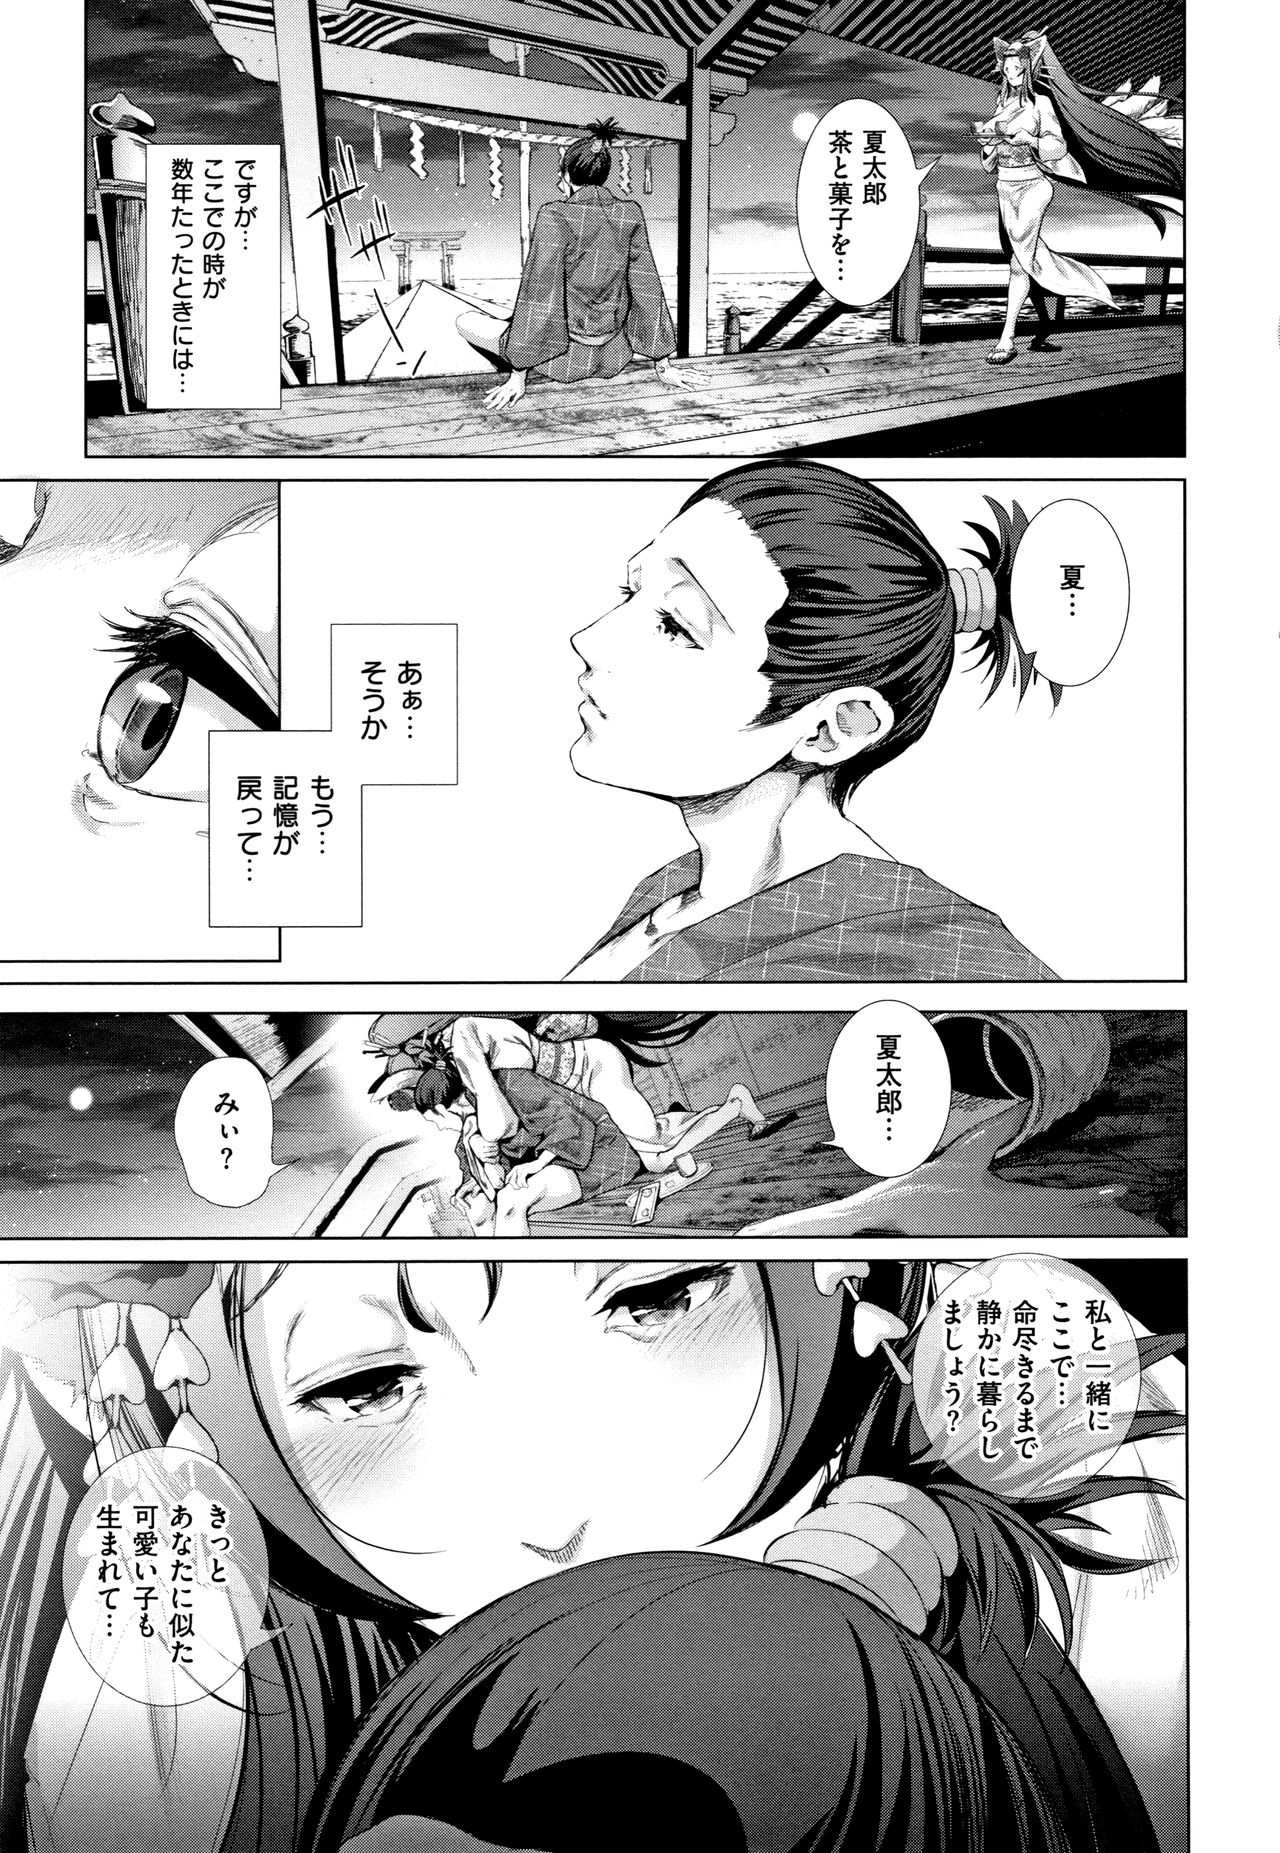 [Suzuhane Suzu] Cos wa Midara na Kamen Shogyouban - Cosplay is a mask [wakes up erotic personality...] 175